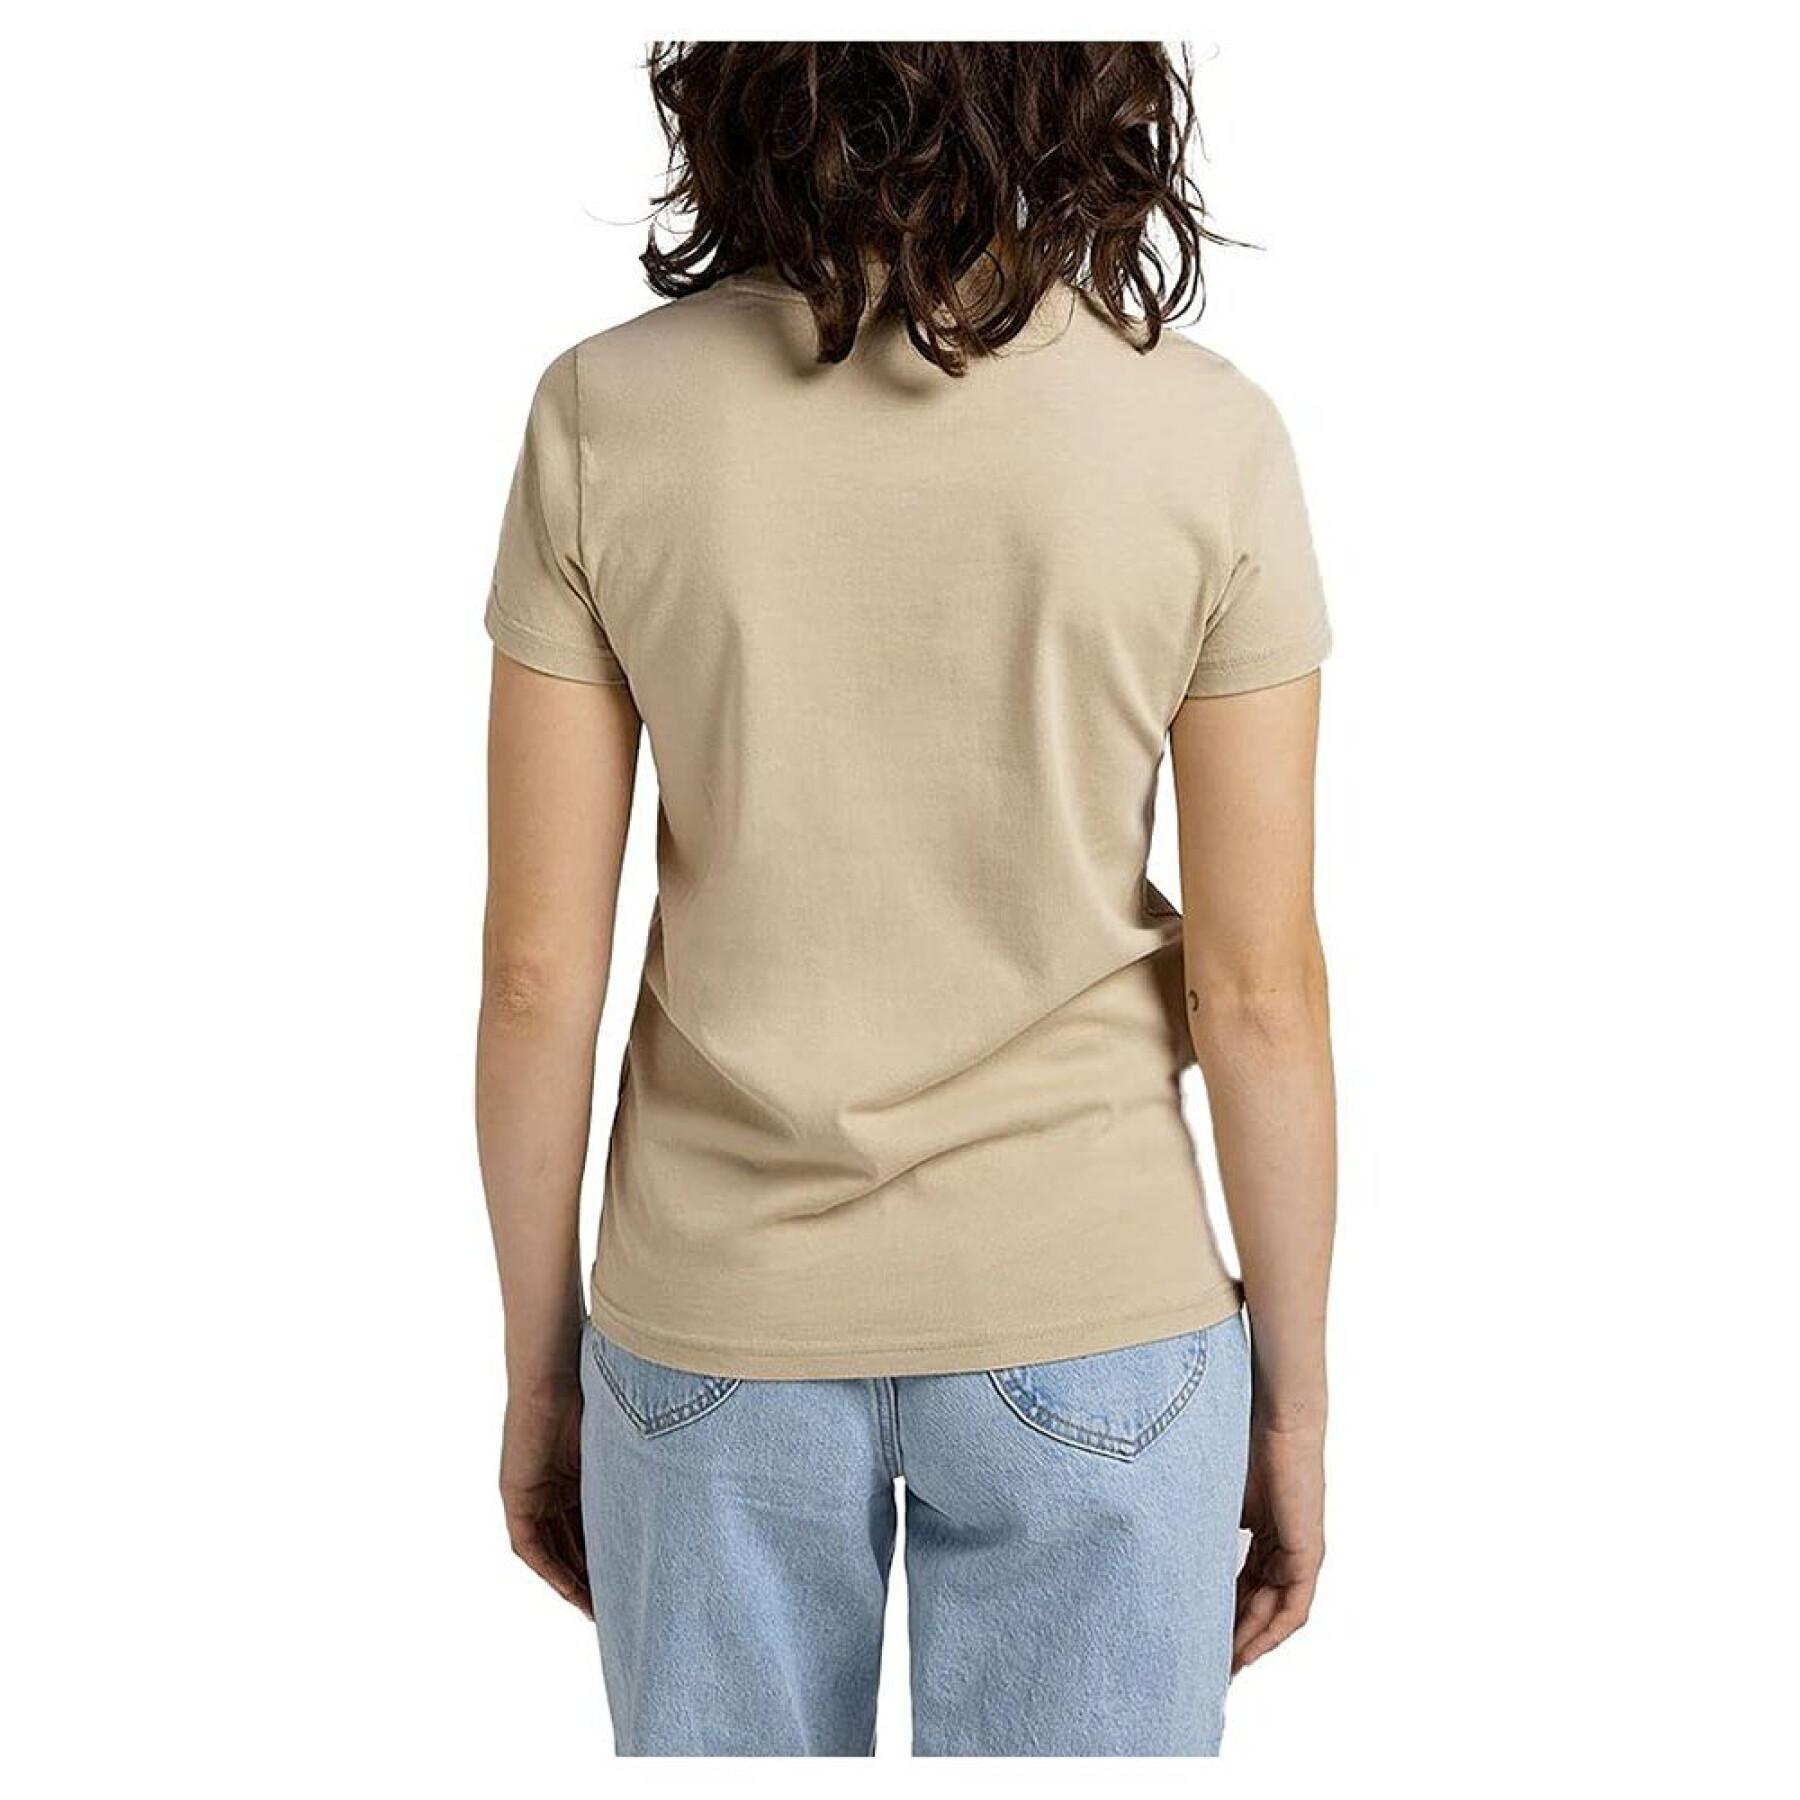 Frauen-T-Shirt Lee Easy Graphic